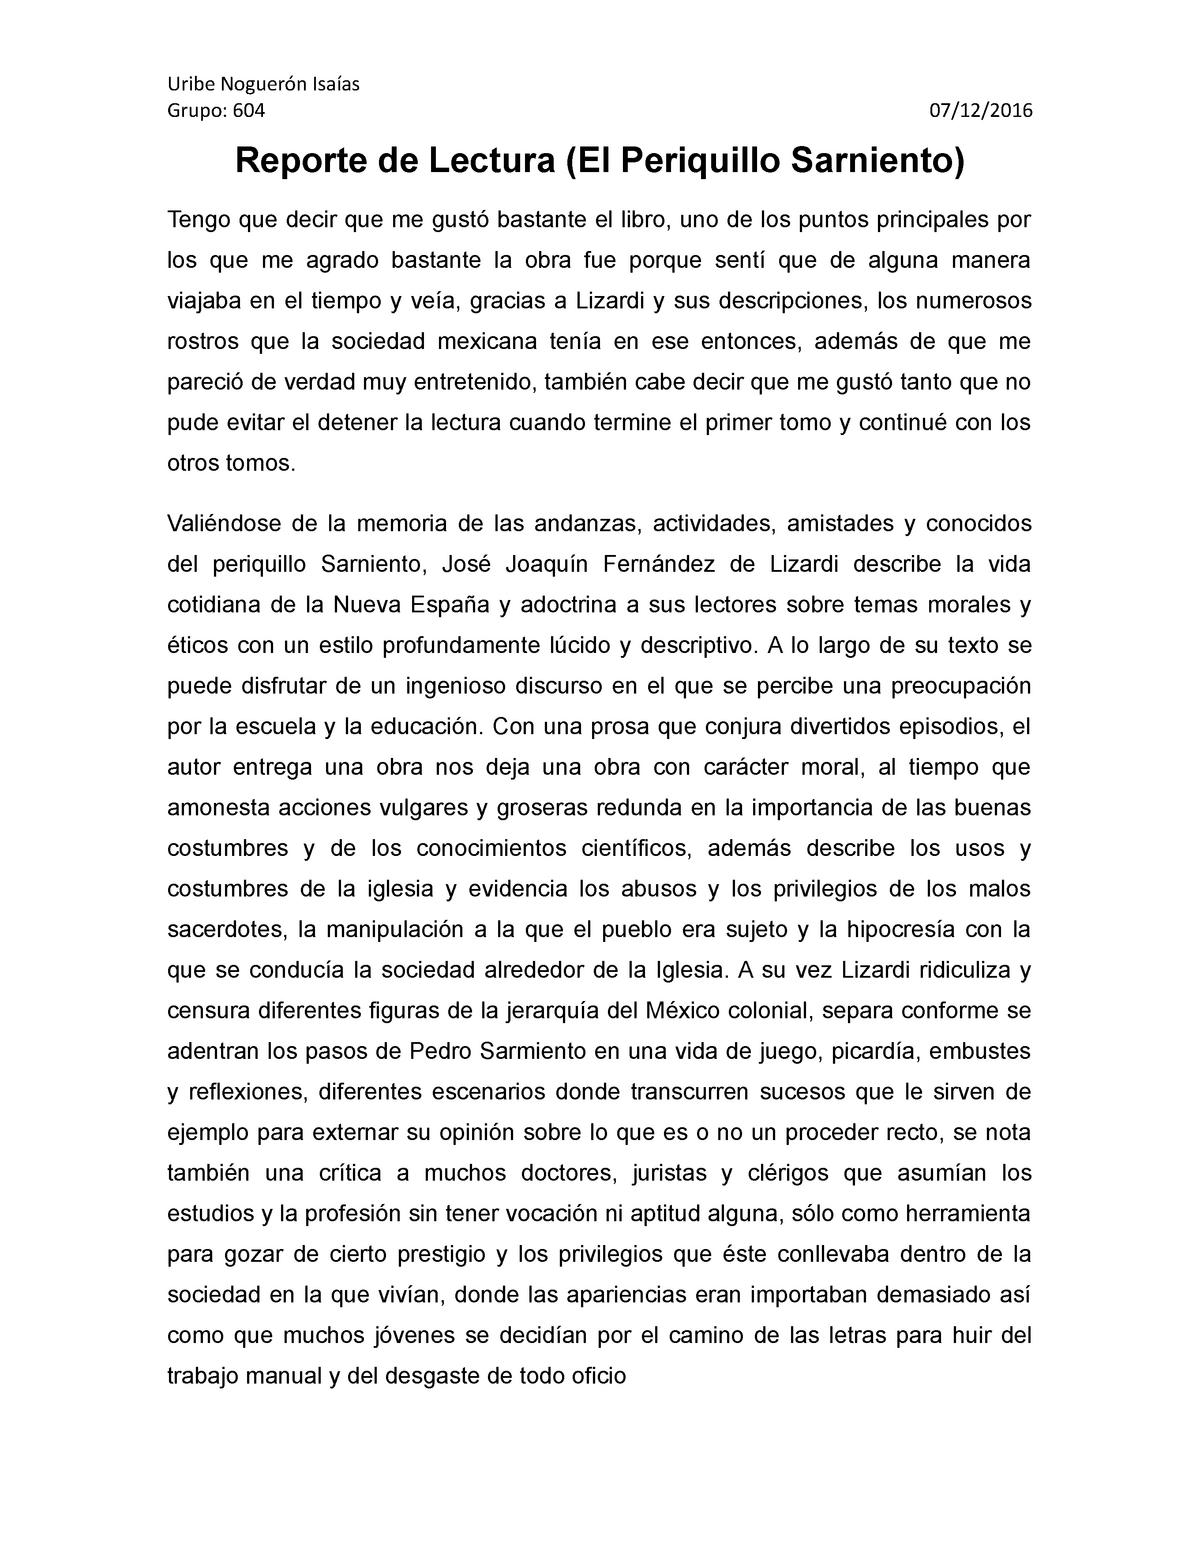 Reporte De Lectura Periquillo Sarniento 1516 Unam Studocu